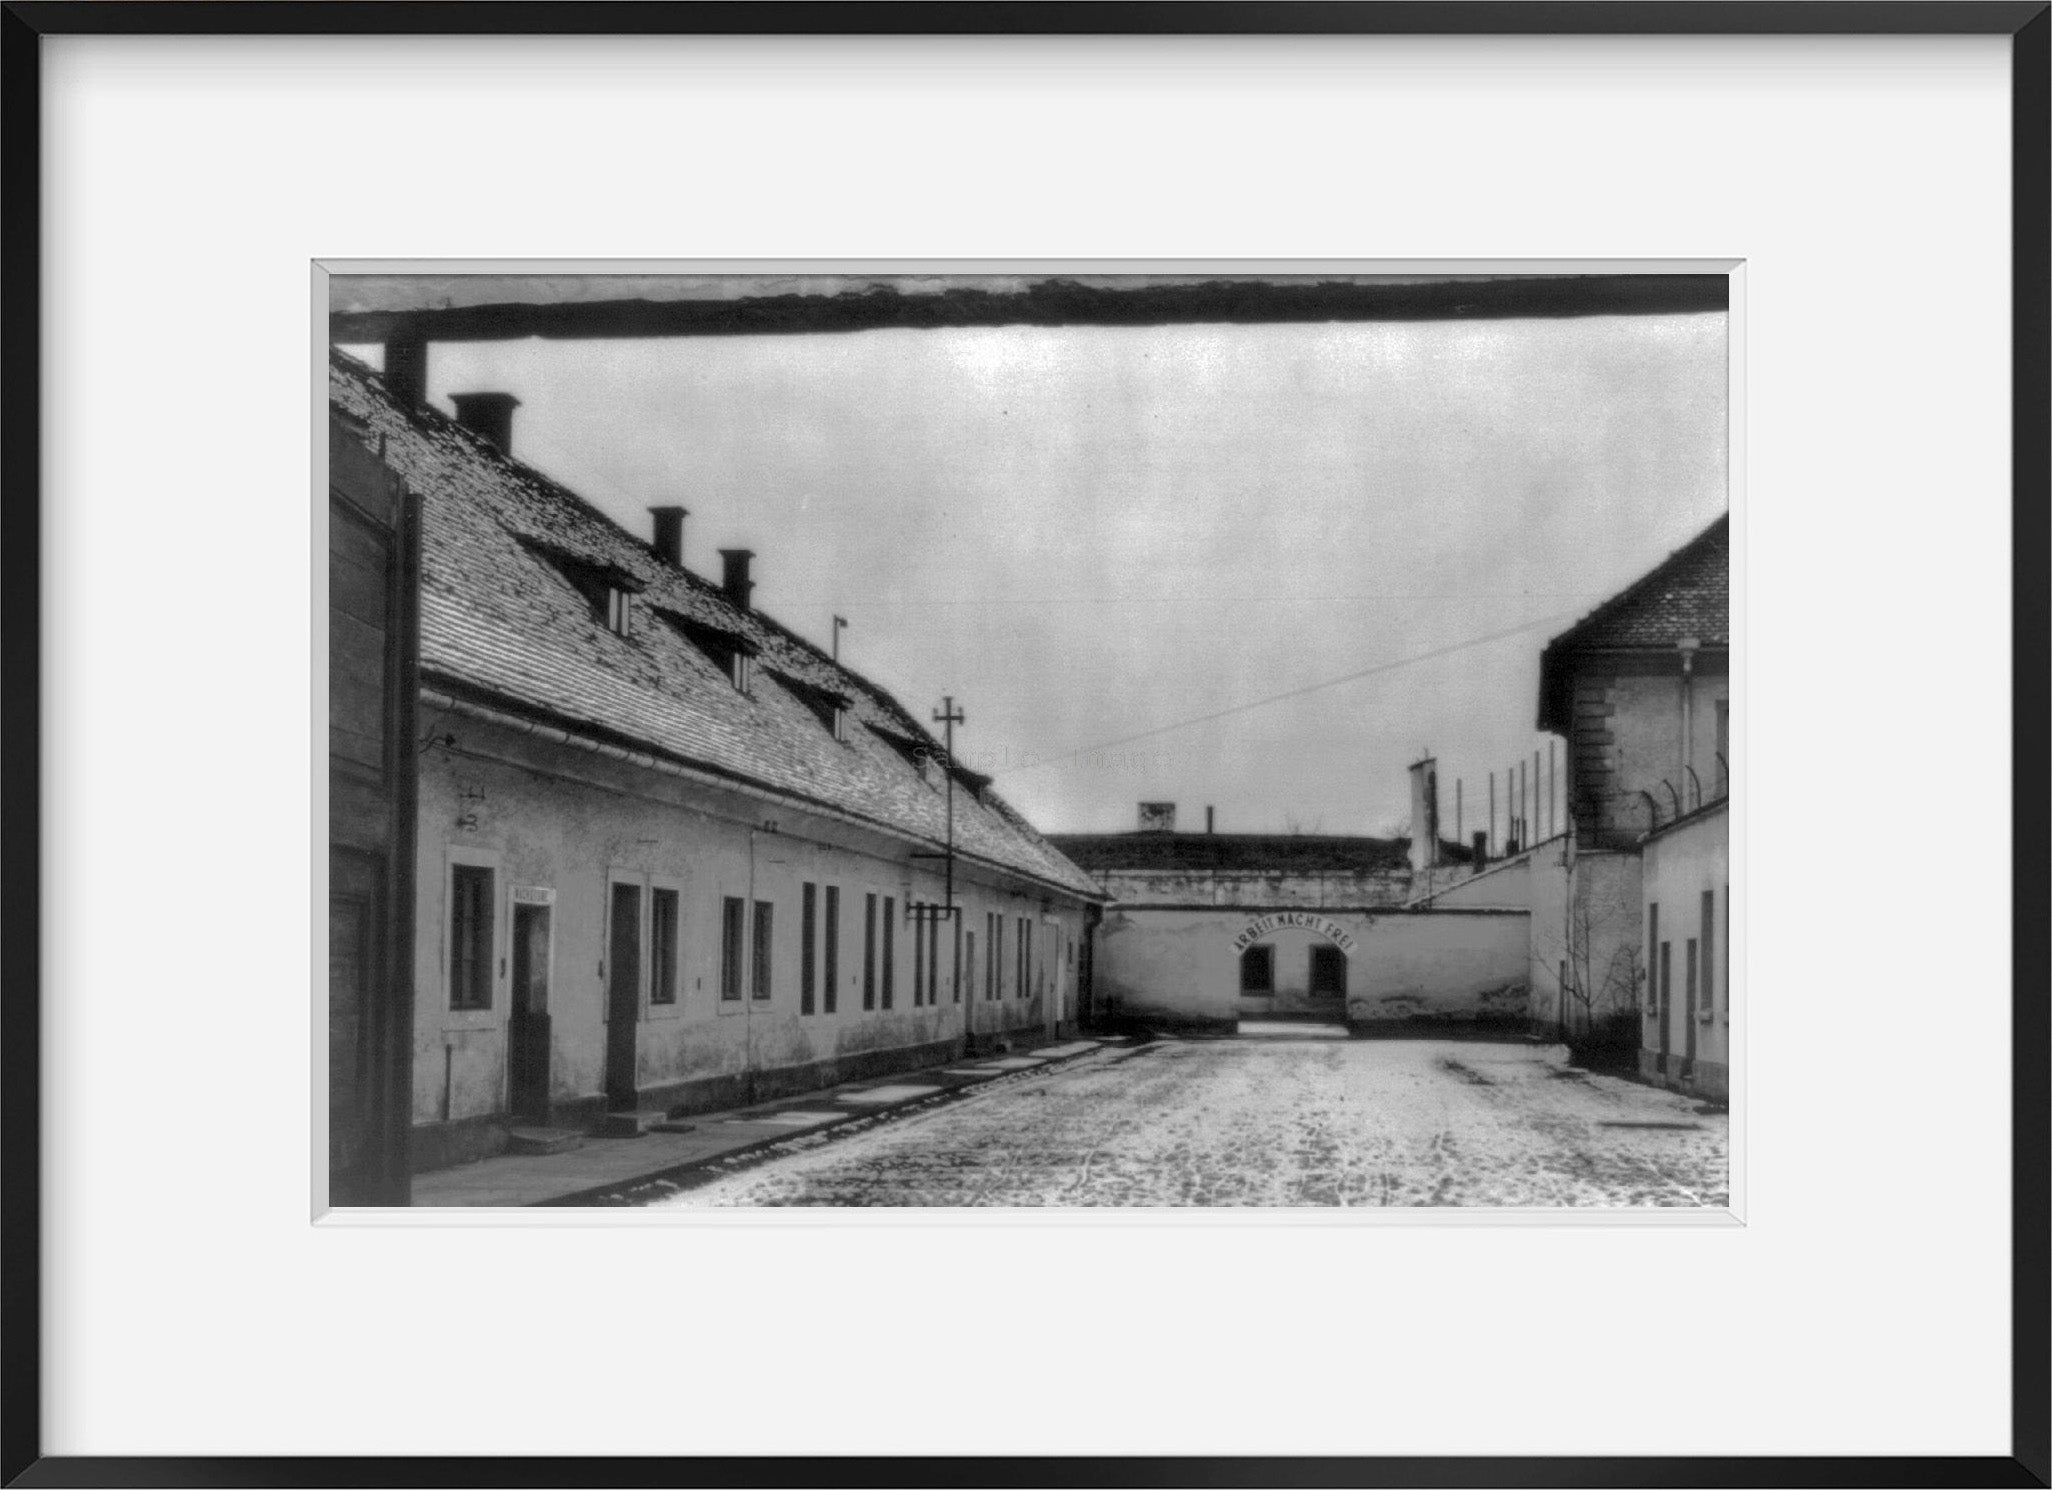 Photo: Concentration camp, Arbeit macht frei, Theresienstadt, Czechoslovakia, 1946, i